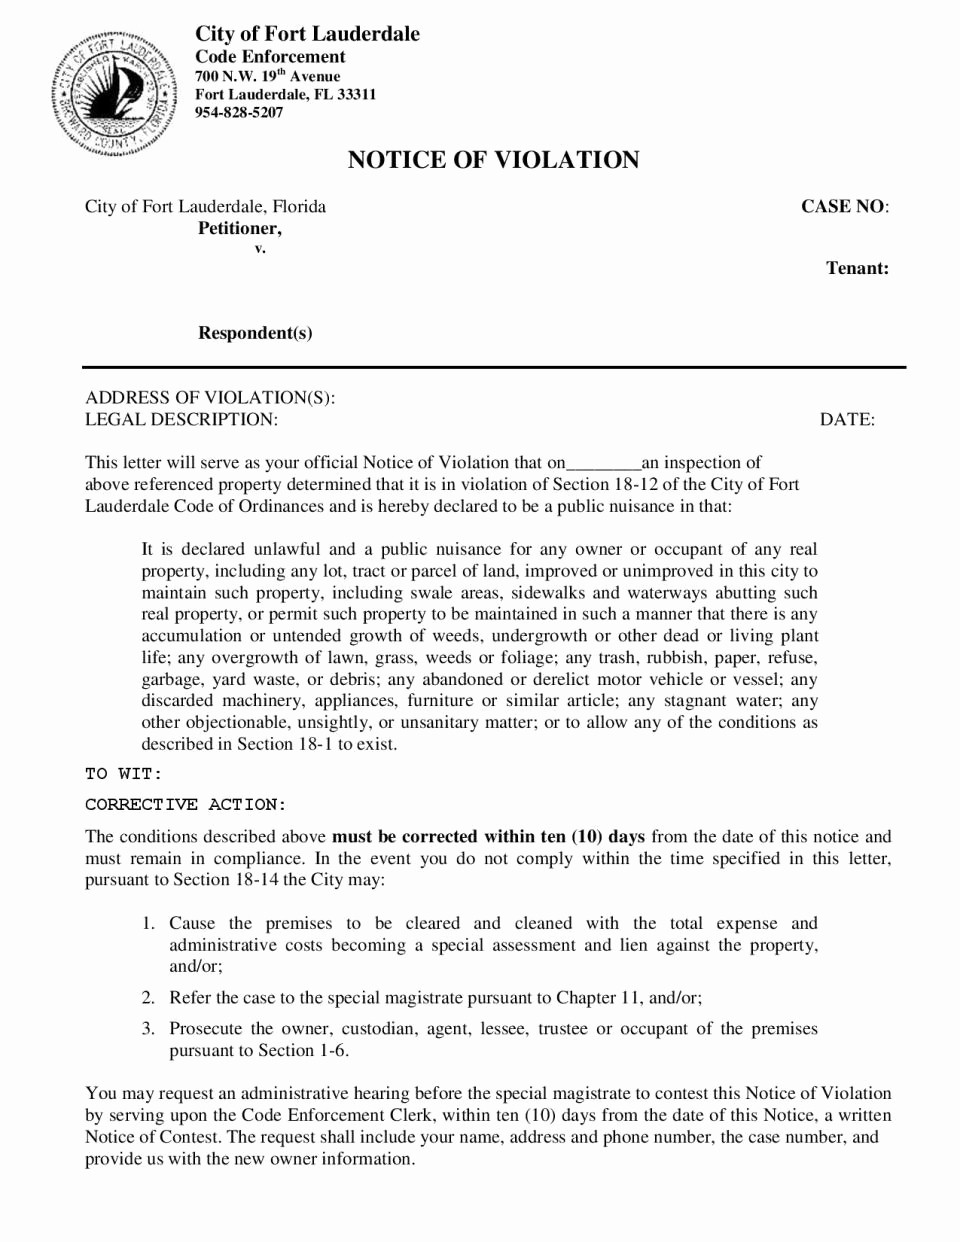 Notice Of Violation Letter Sample Unique City Of fort Lauderdale Fl Neighbor Resources